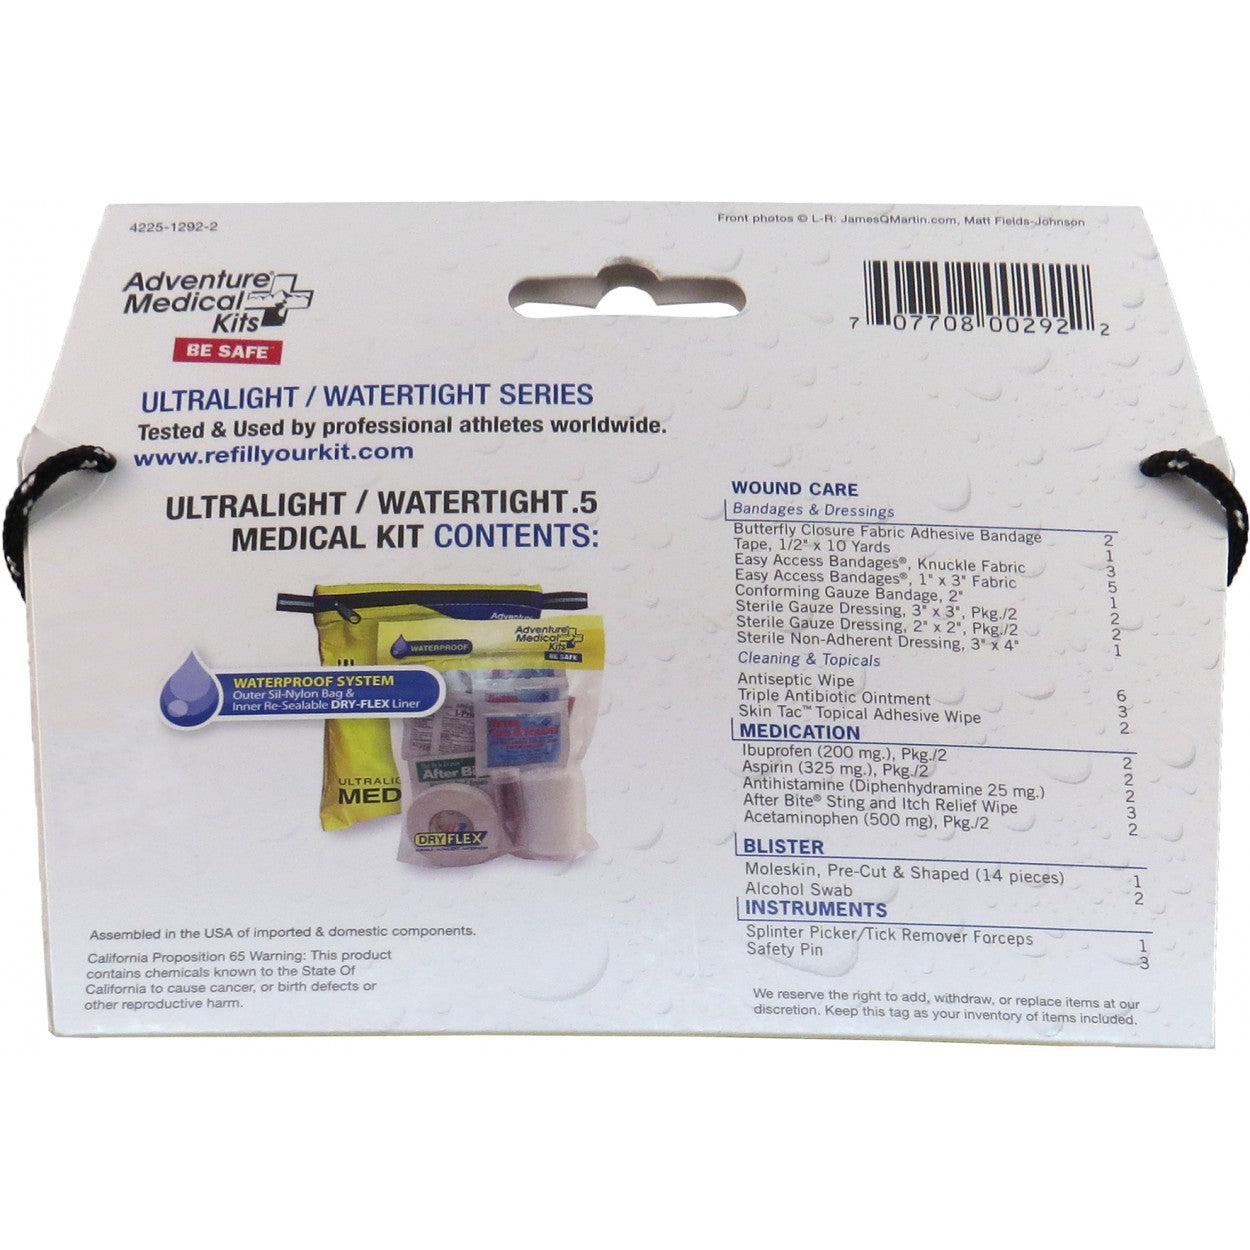 Adventure Medical Kit - Ultralight Medical Kit .5 First Aid Kit